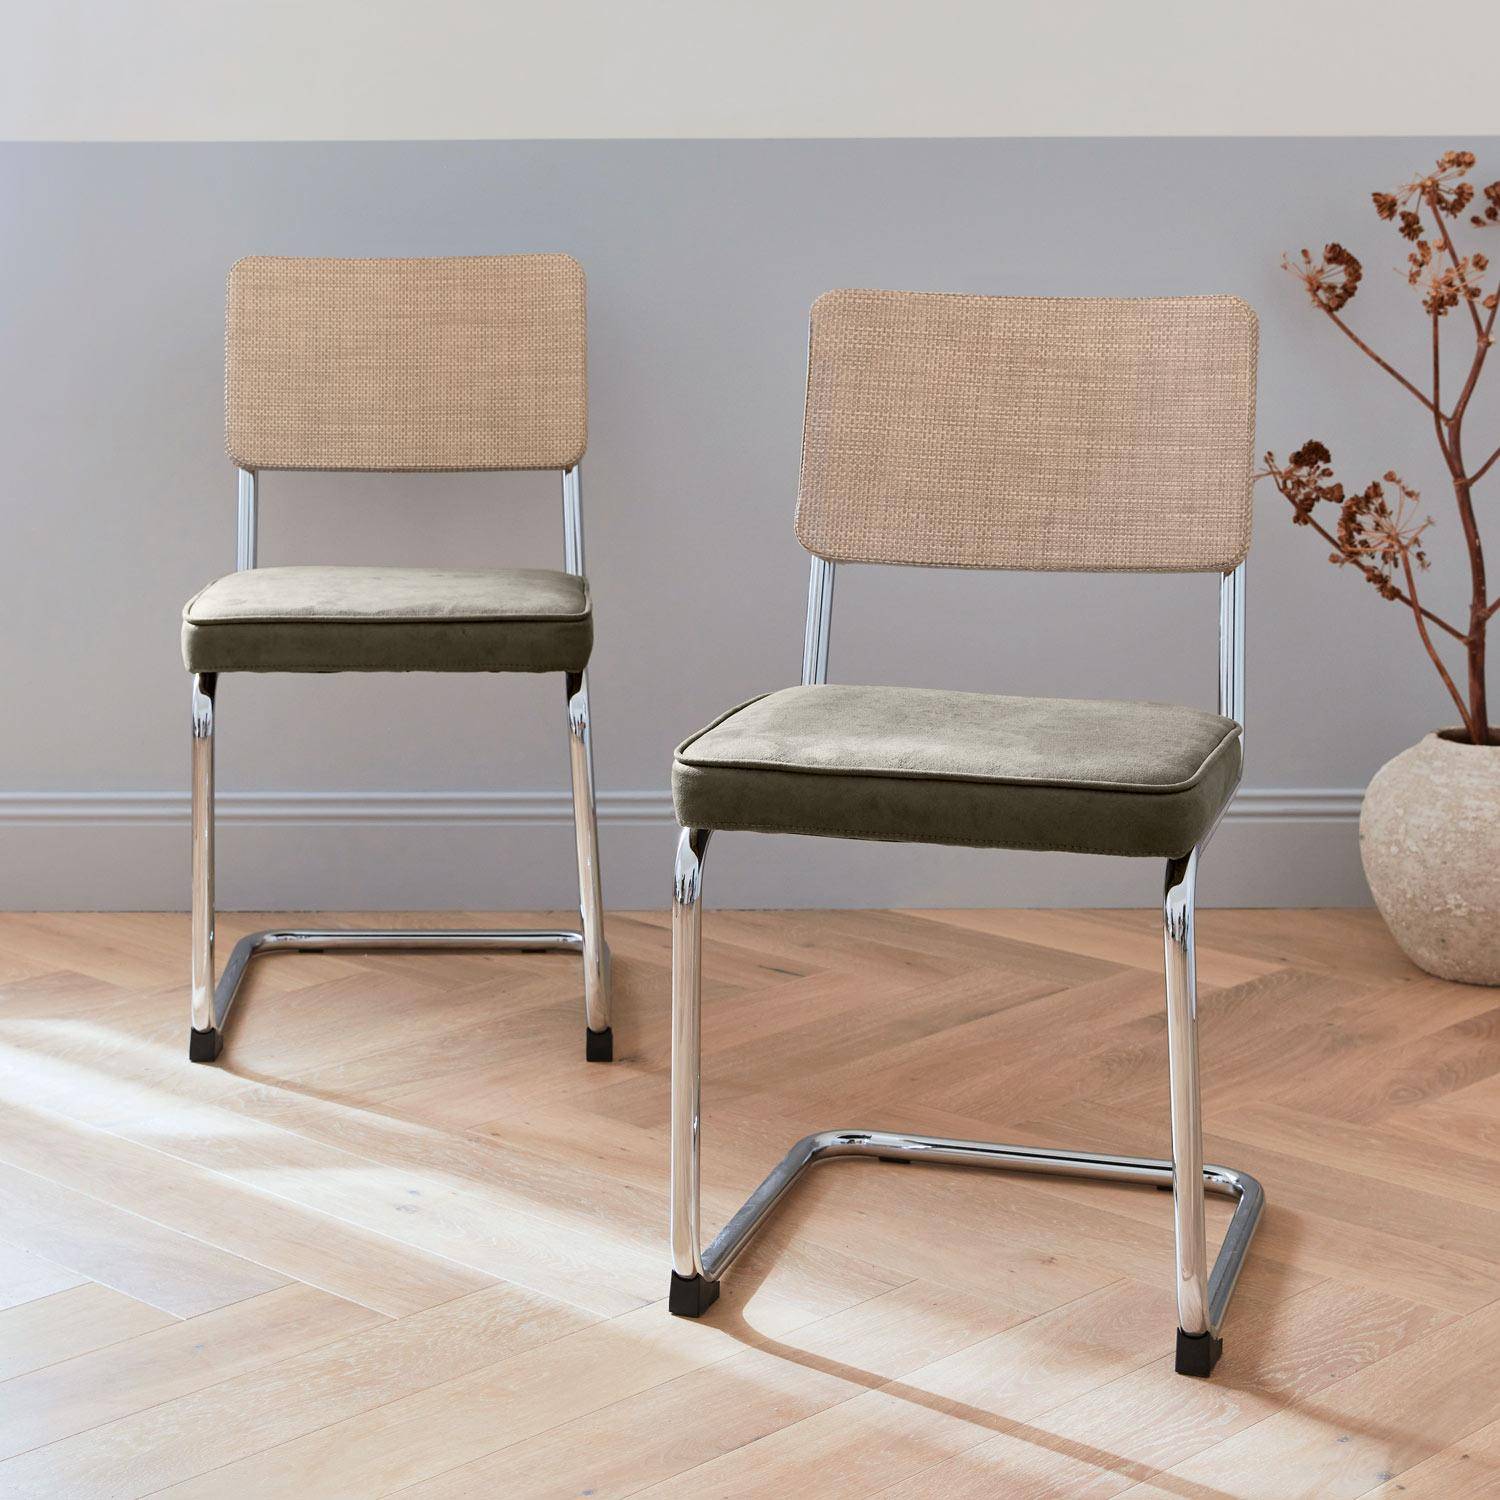 2 chaises cantilever - Maja - tissu kaki et résine effet rotin, 46 x 54,5 x 84,5cm   Photo2